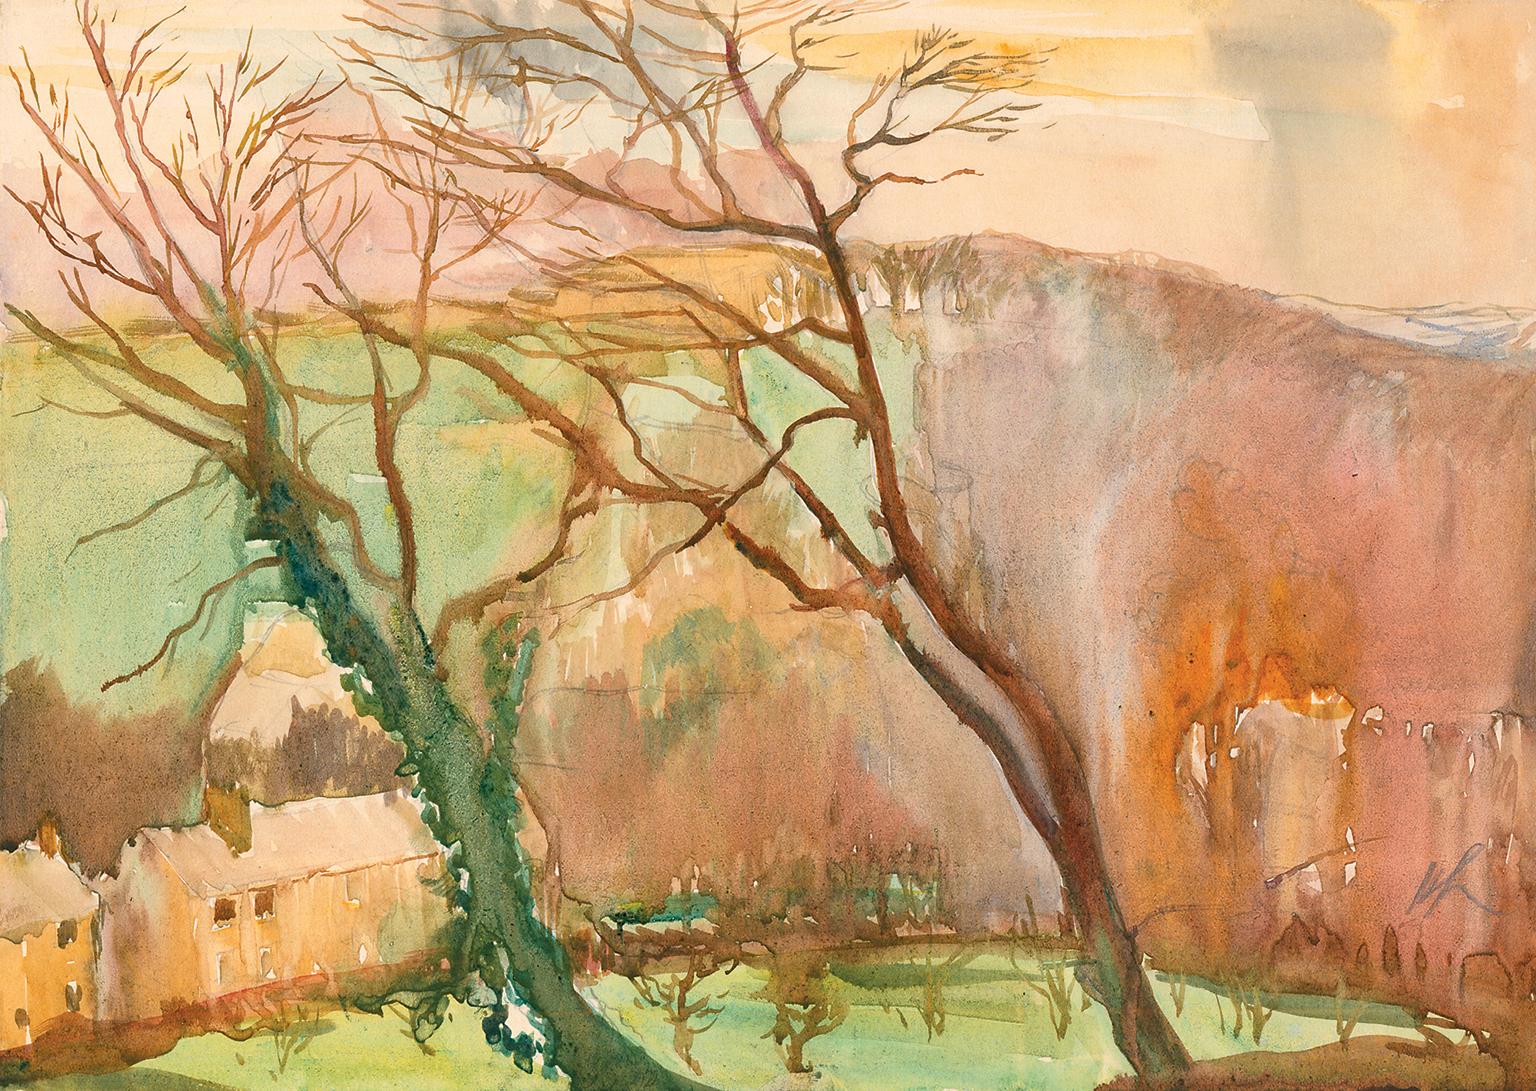 St. Astruell, England — 1910 watercolor